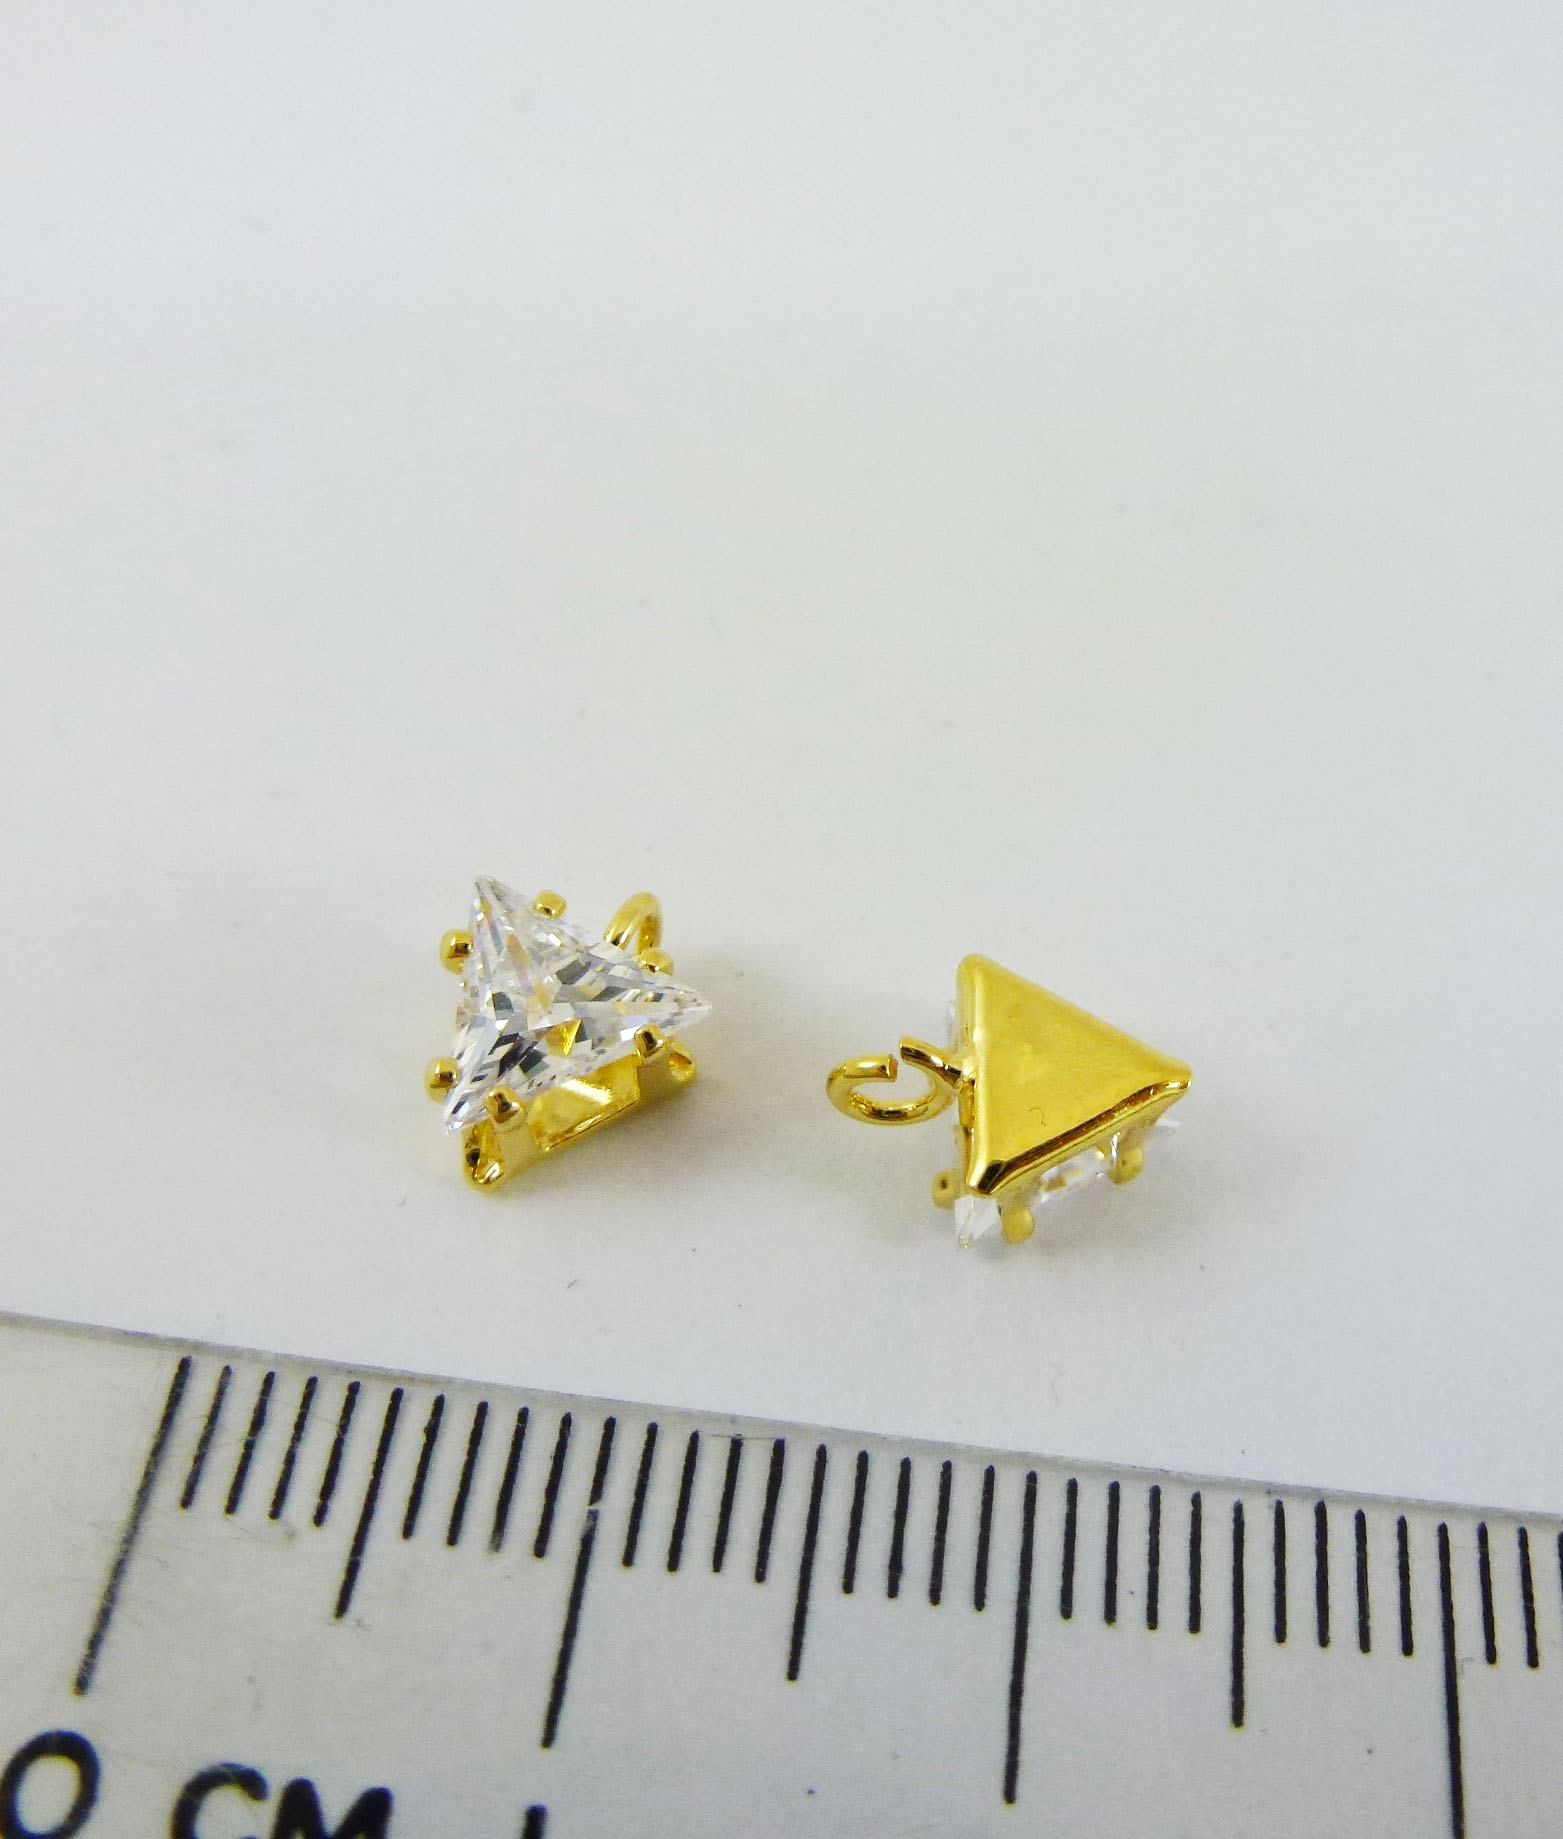 6mm銅鍍金色單孔三角形鋯石